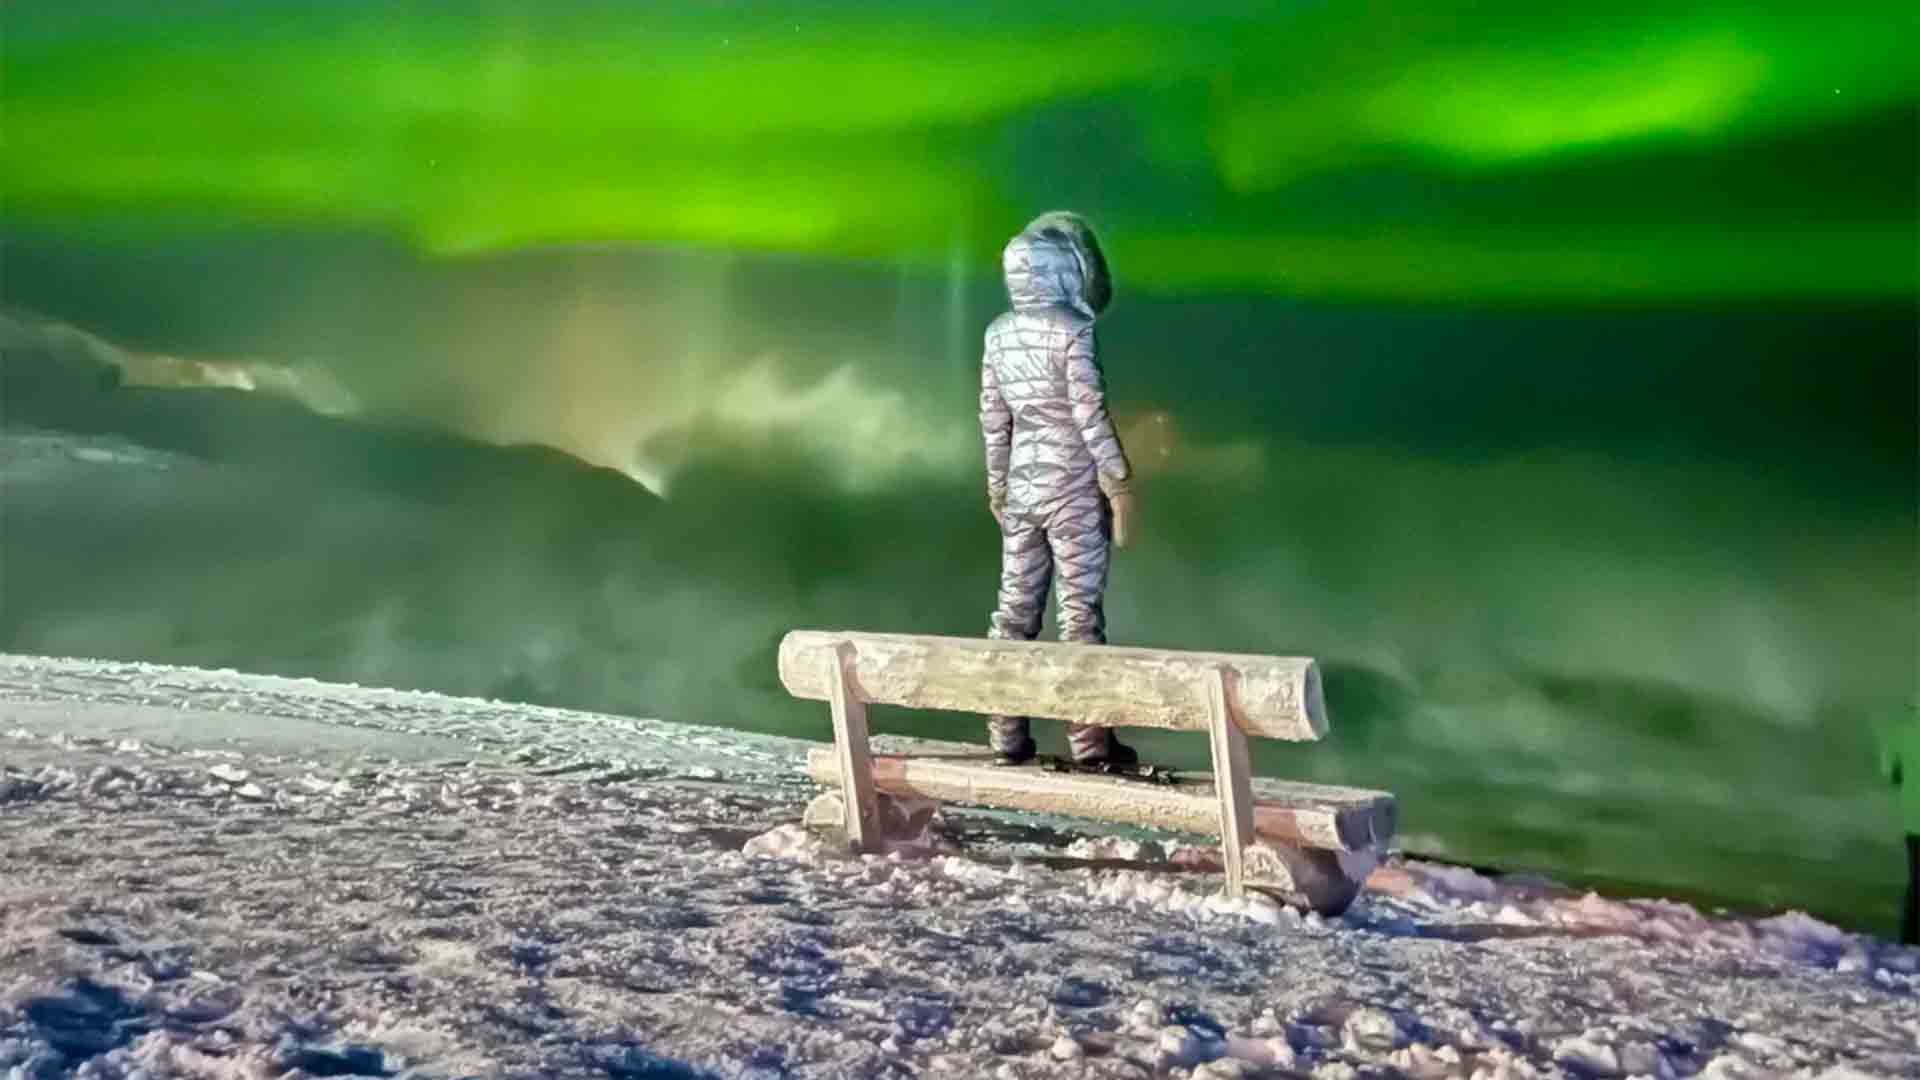 "Magic of Aurora Borealis." Russia